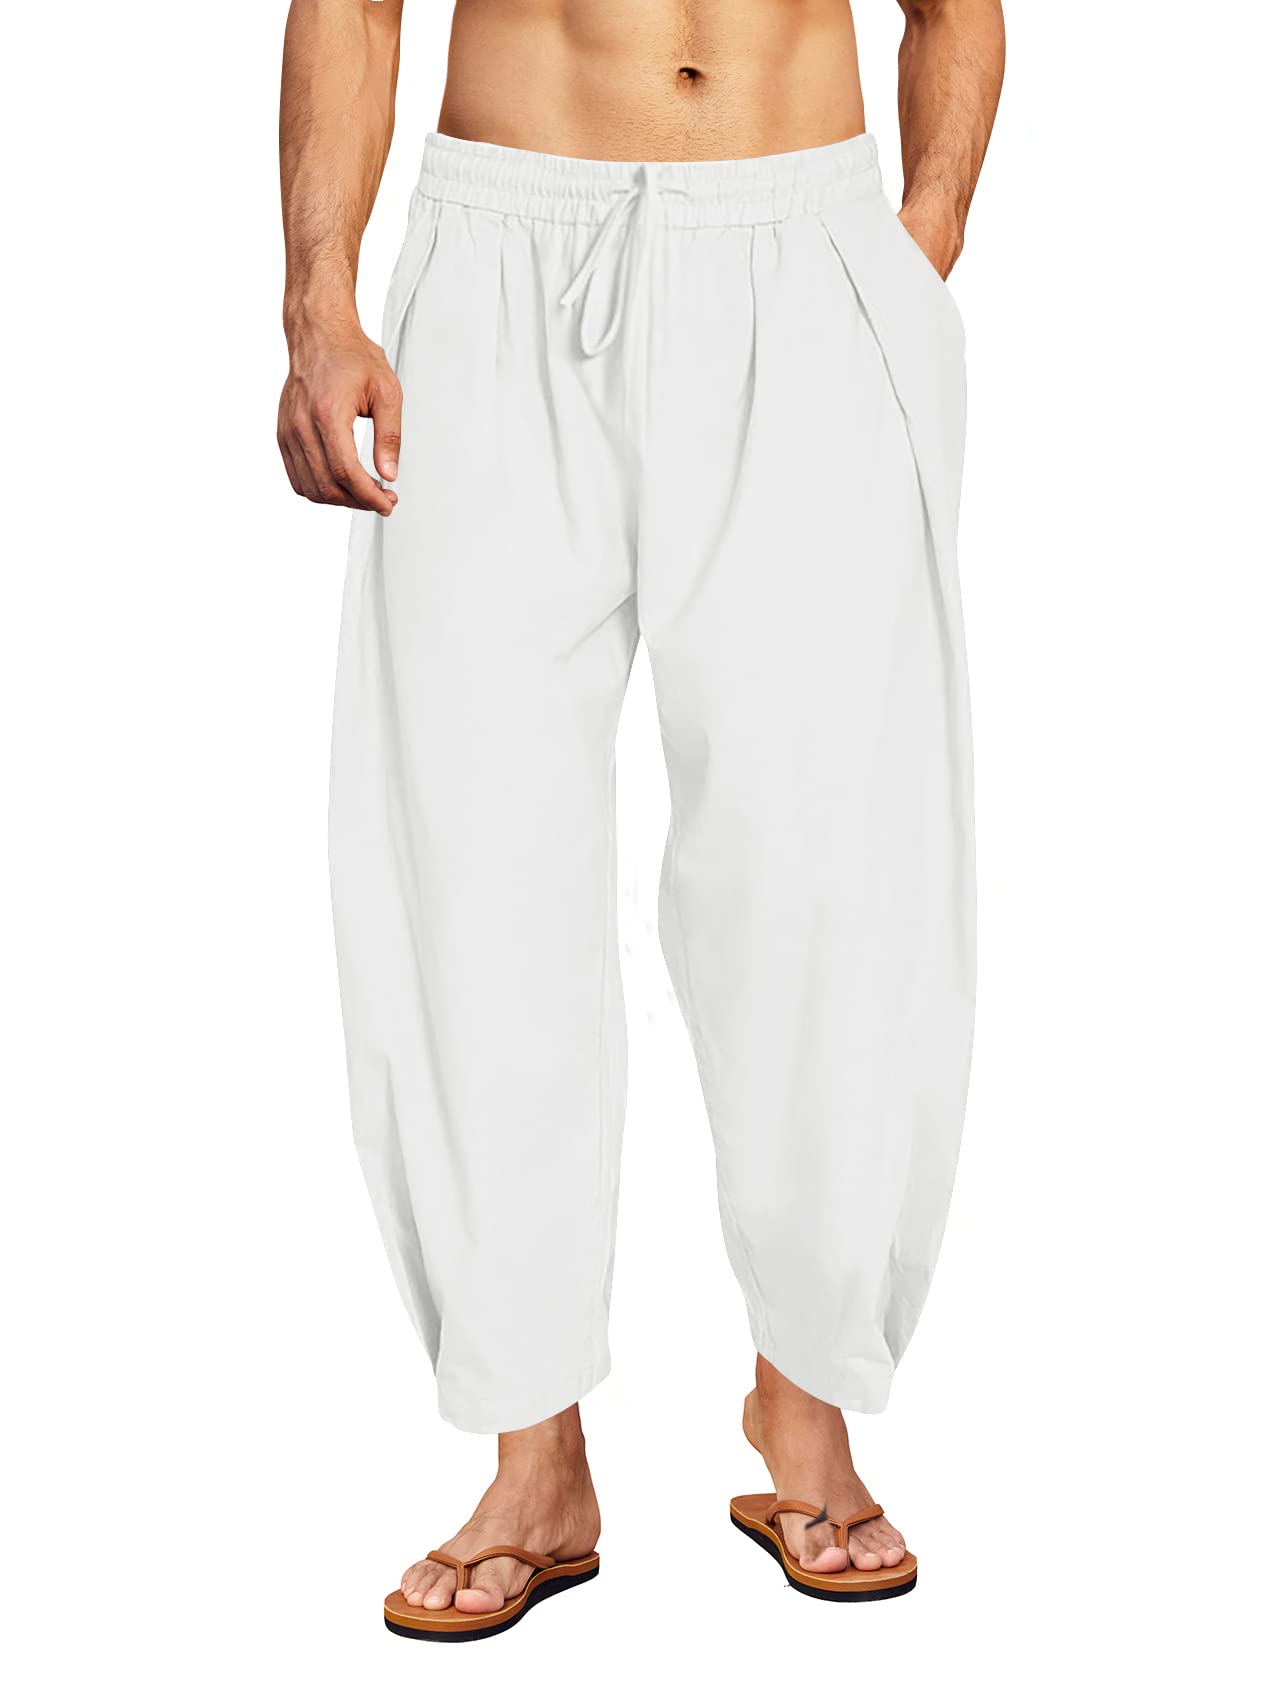 Mens Cotton Drawstring Casual Yoga Pants, Plus Size. – Liash